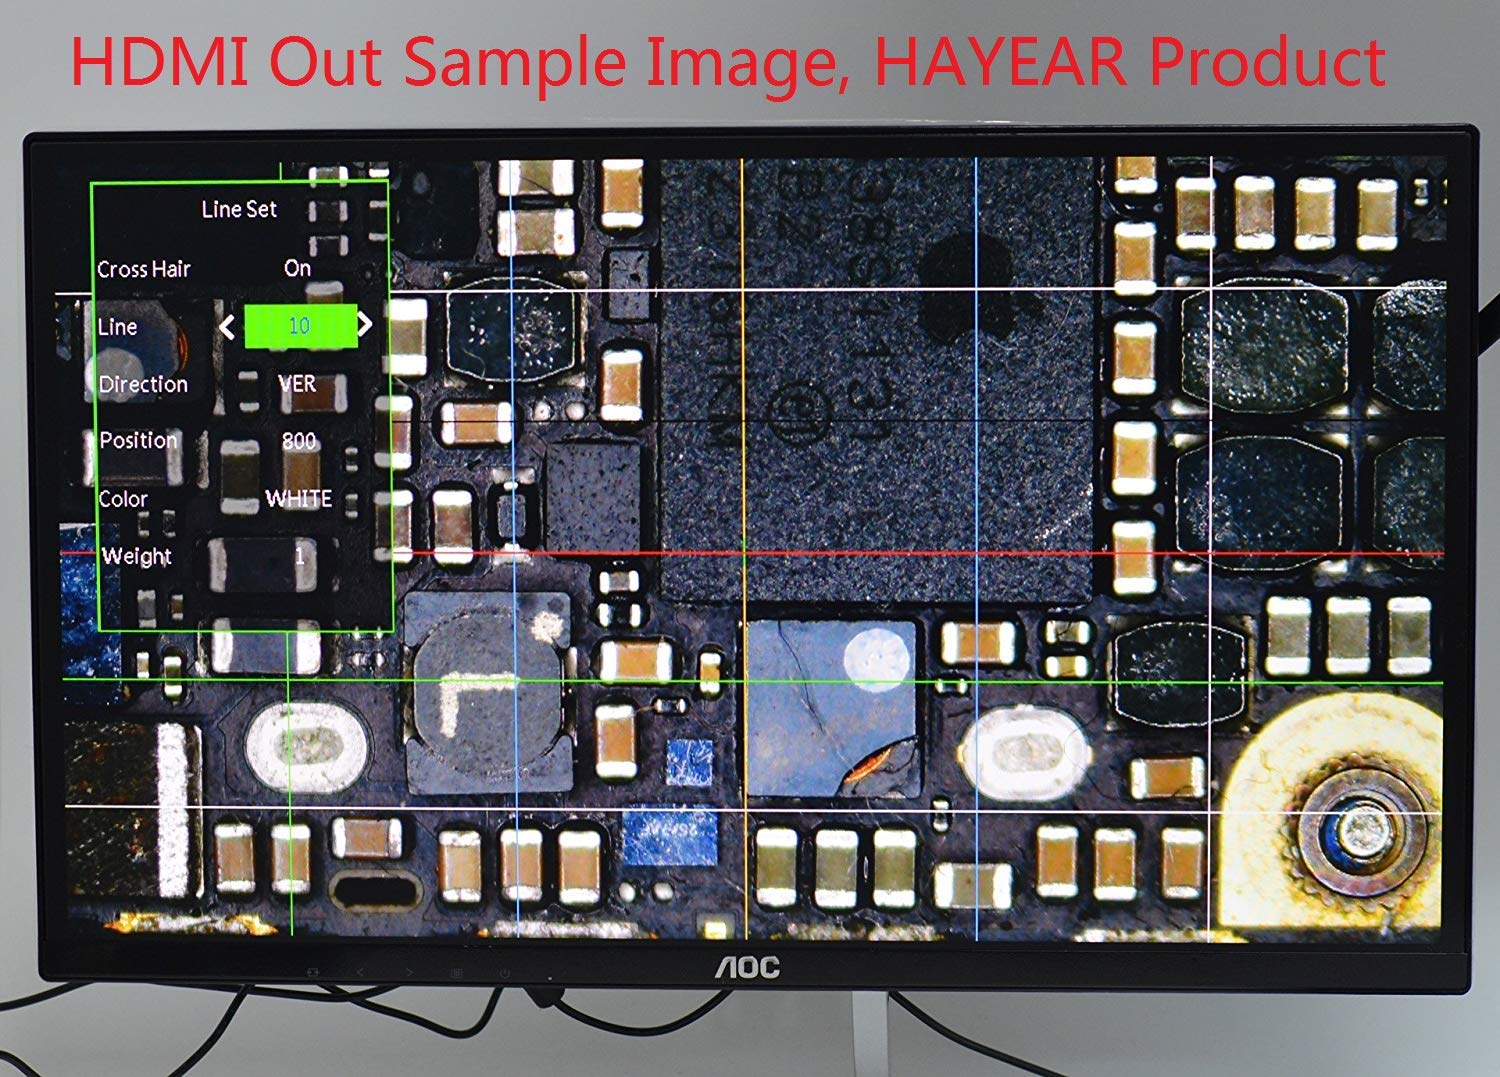 HAYEAR 14MP HDMI 1080P HD USB Digital Industry Microscope Camera TF Card Video Recorder 0.5X C Mount Eyepiece Lens 30mm/30.5mm Adapter